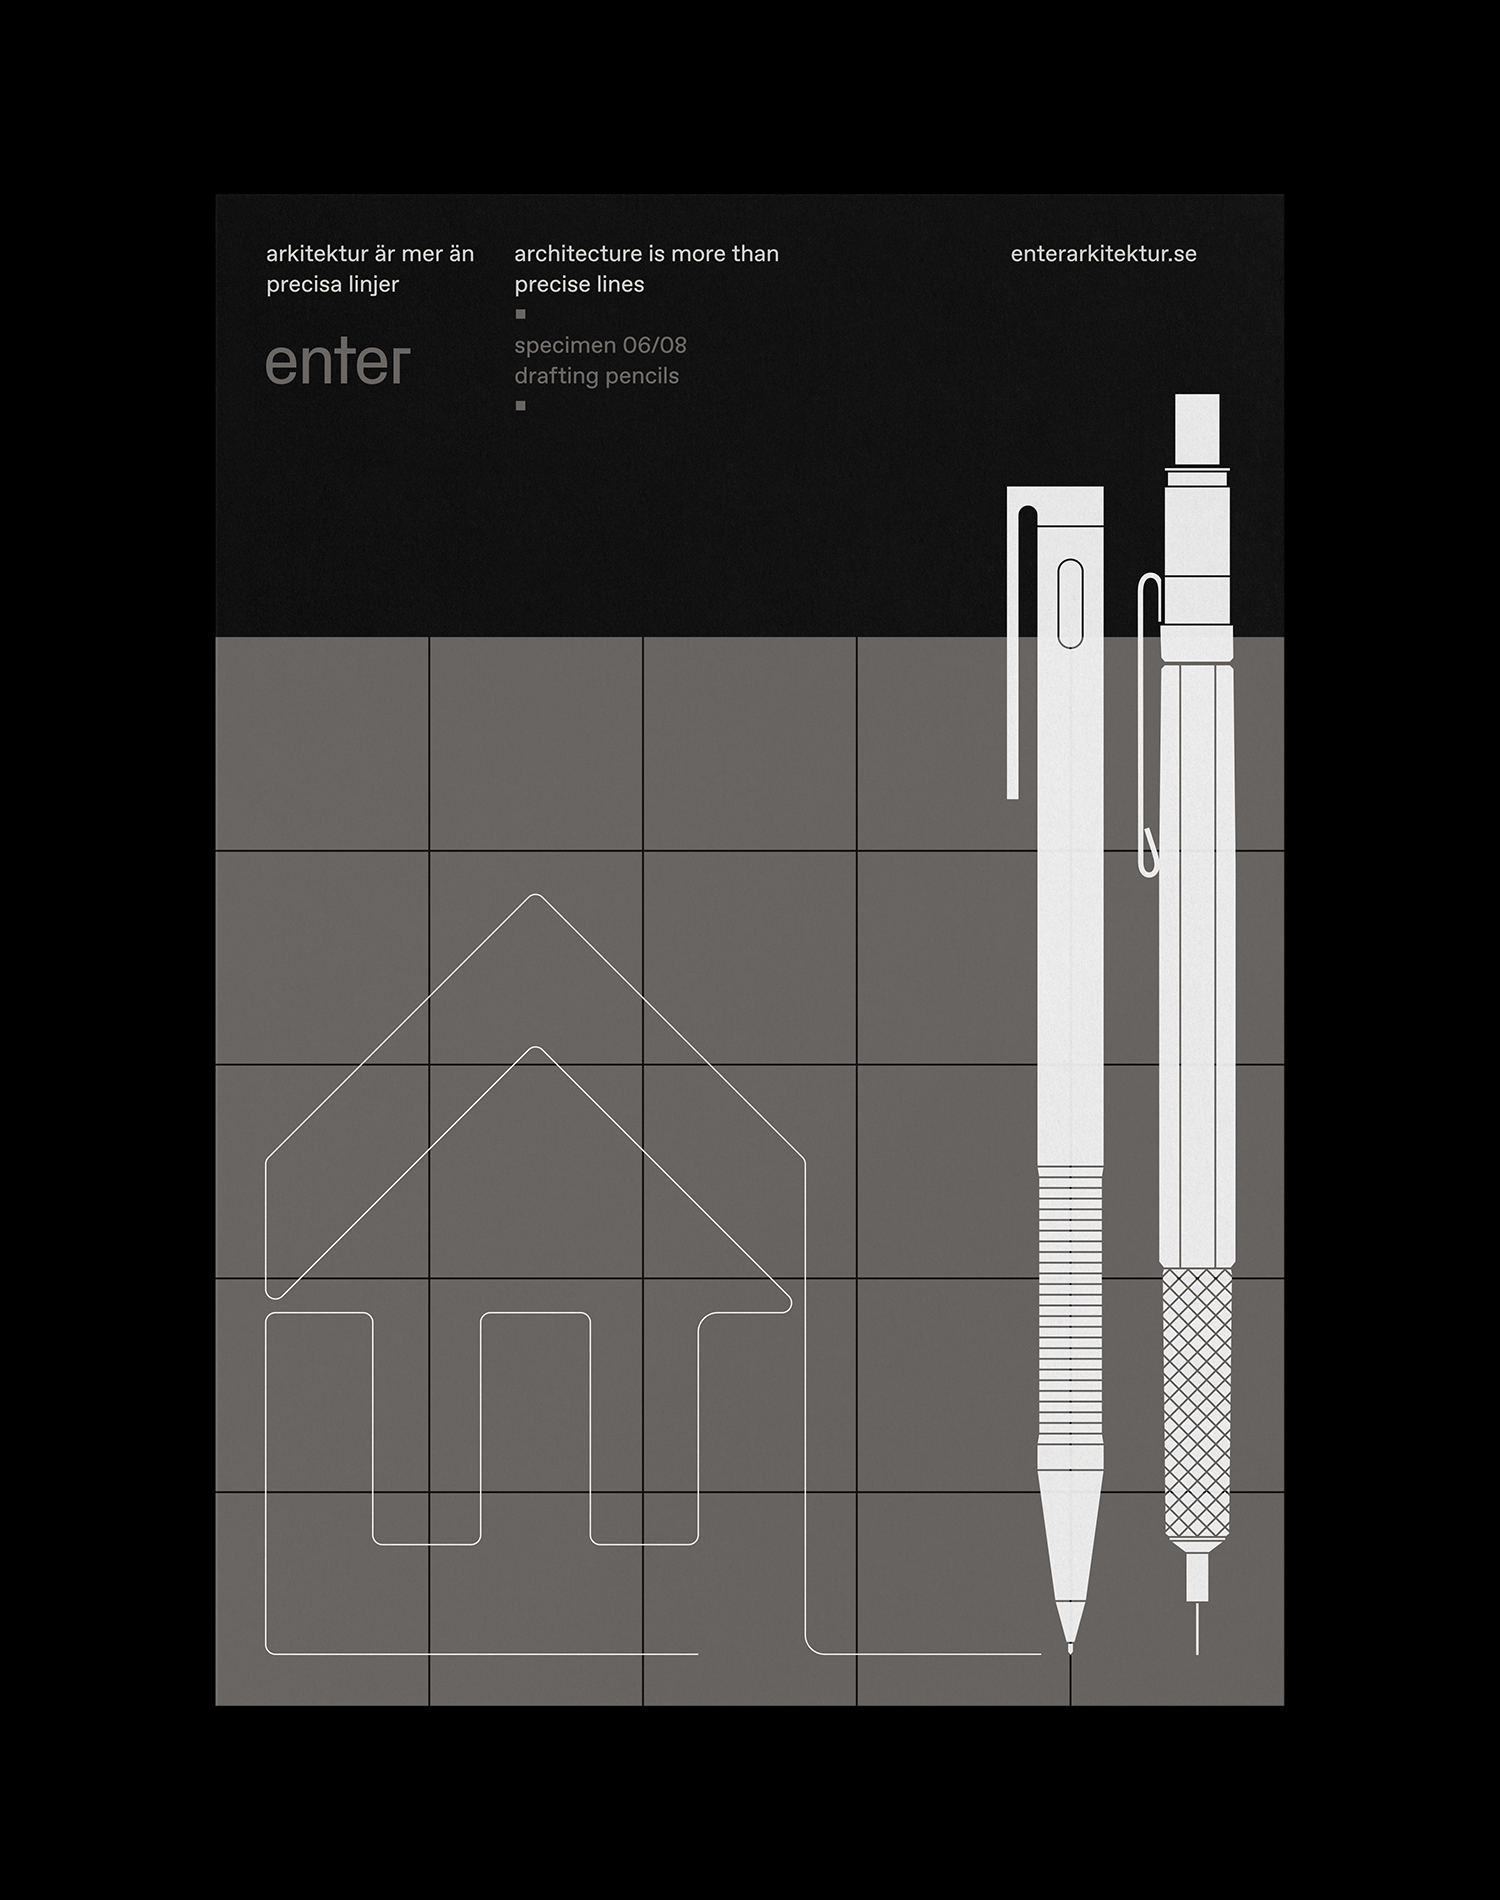 Graphic identity, illustration and A5 postcard designed by by Lundgren+Lindqvist for Swedish architecture studio Lundgren+Lindqvist